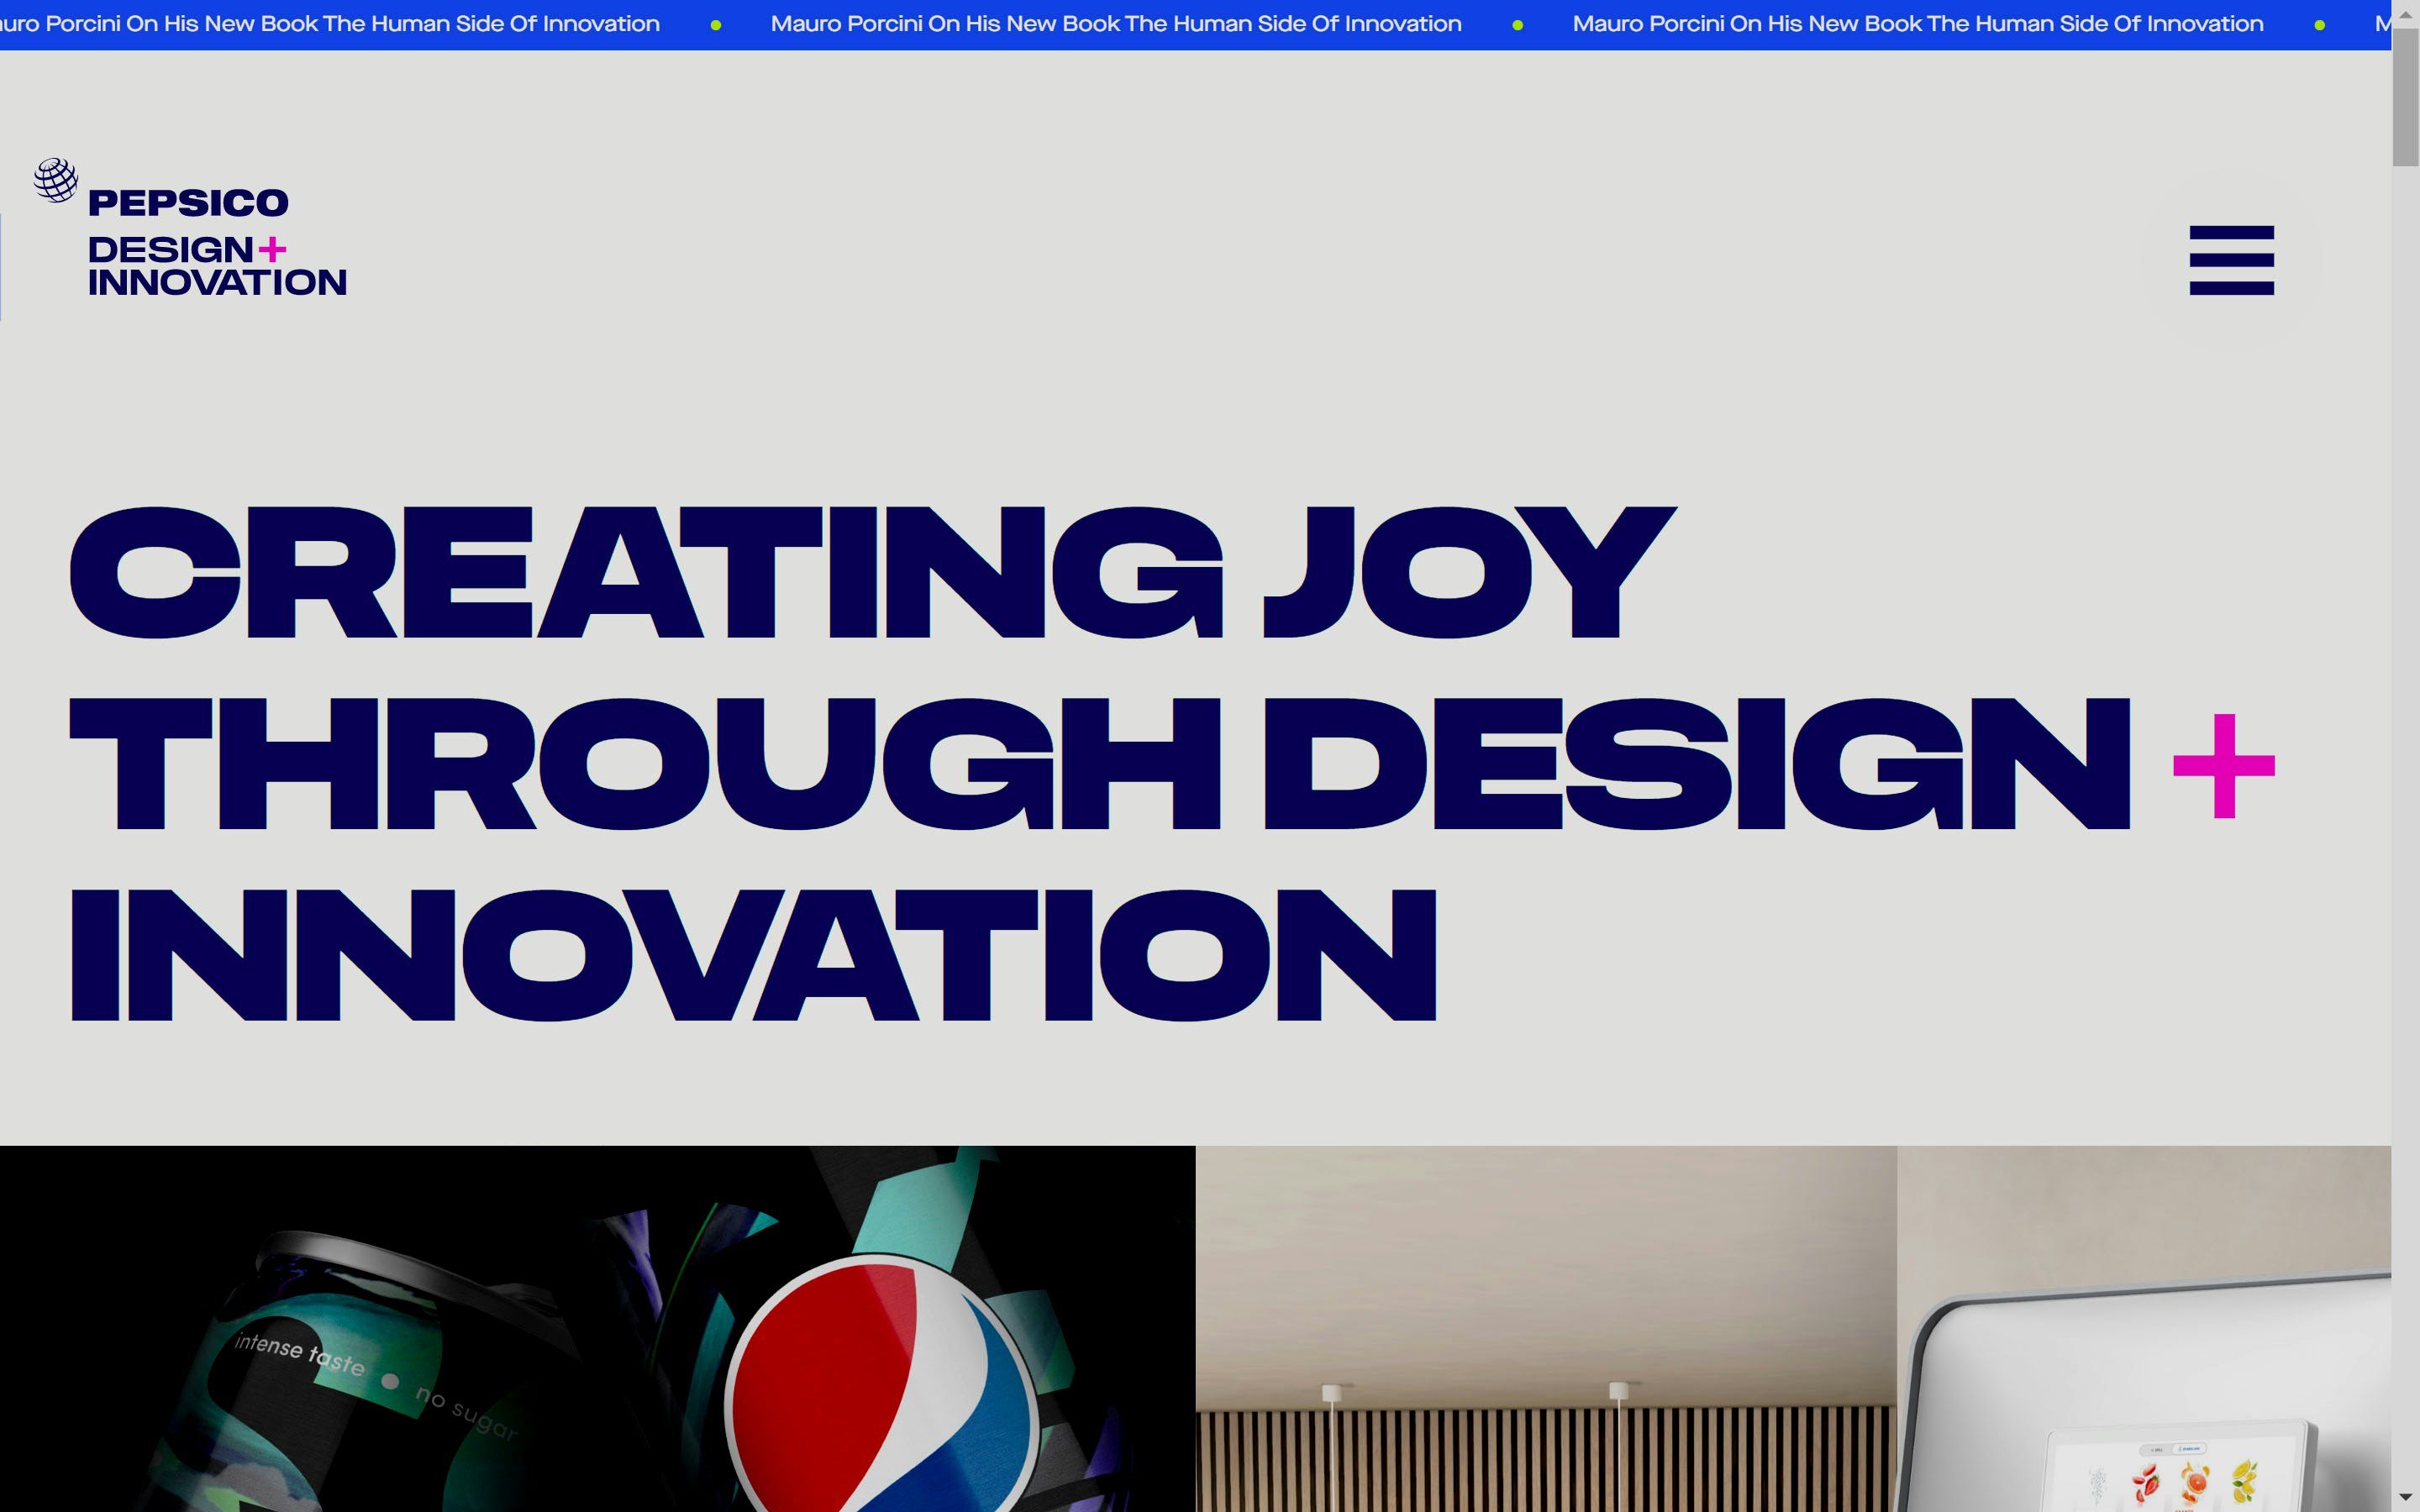 Pepsico Design + Innovation Website (DesktopView)